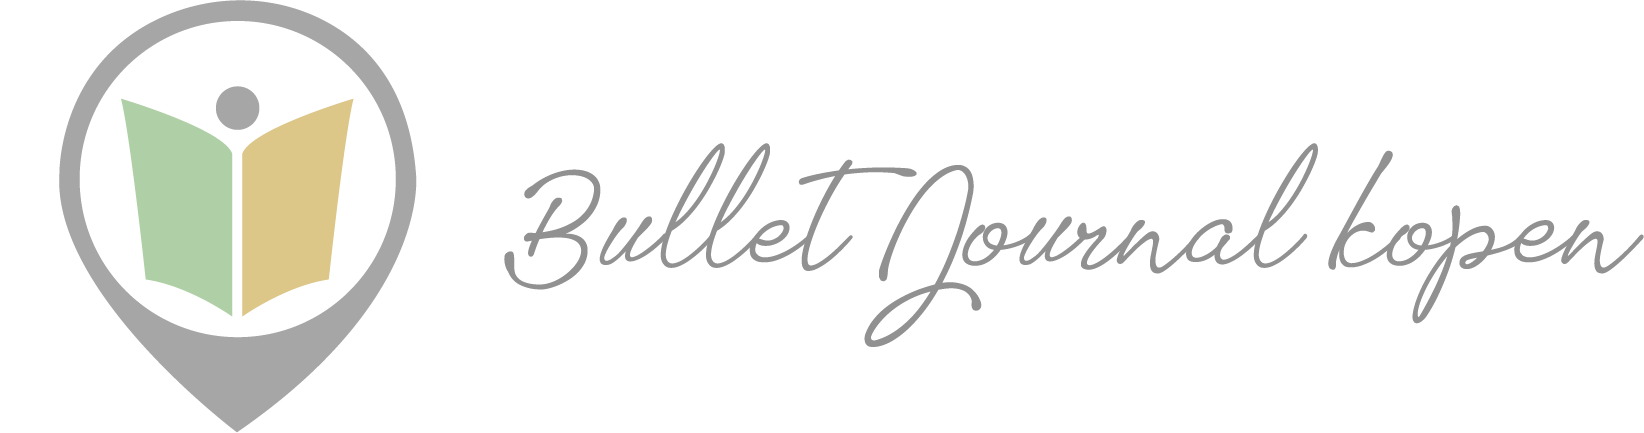 bullet journal stencil